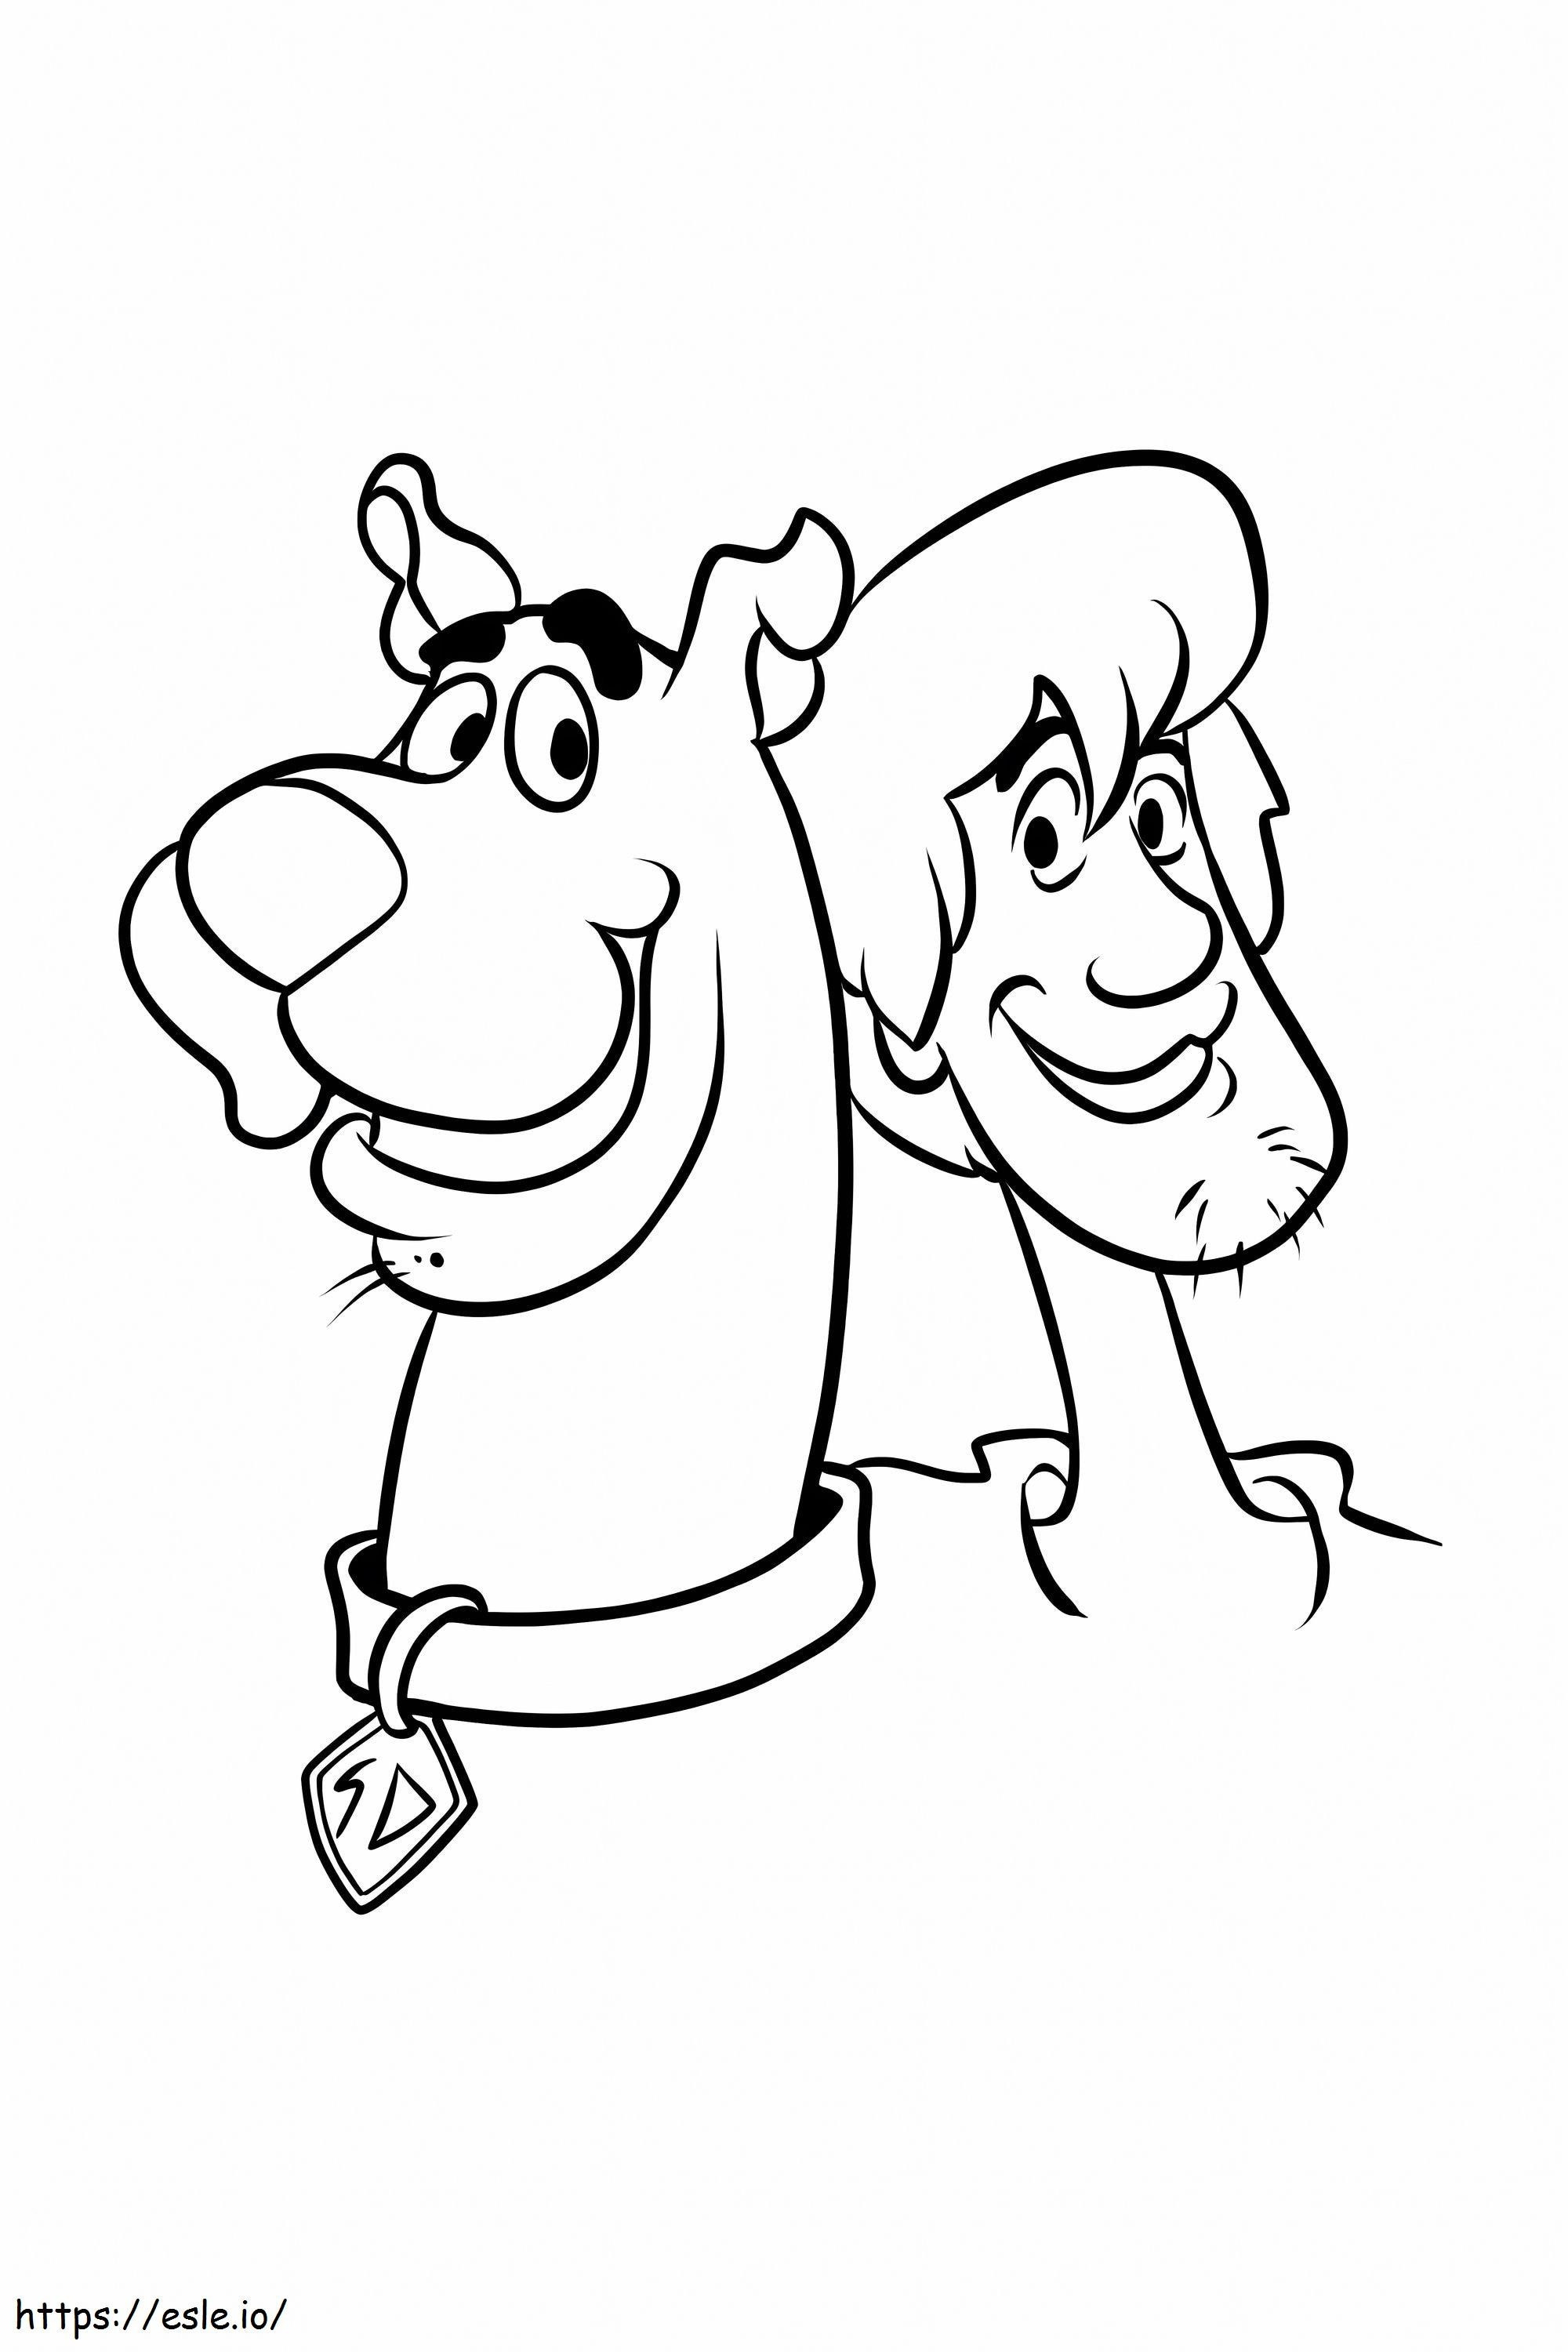 Shaggy Rogers und Scooby Doo Head ausmalbilder